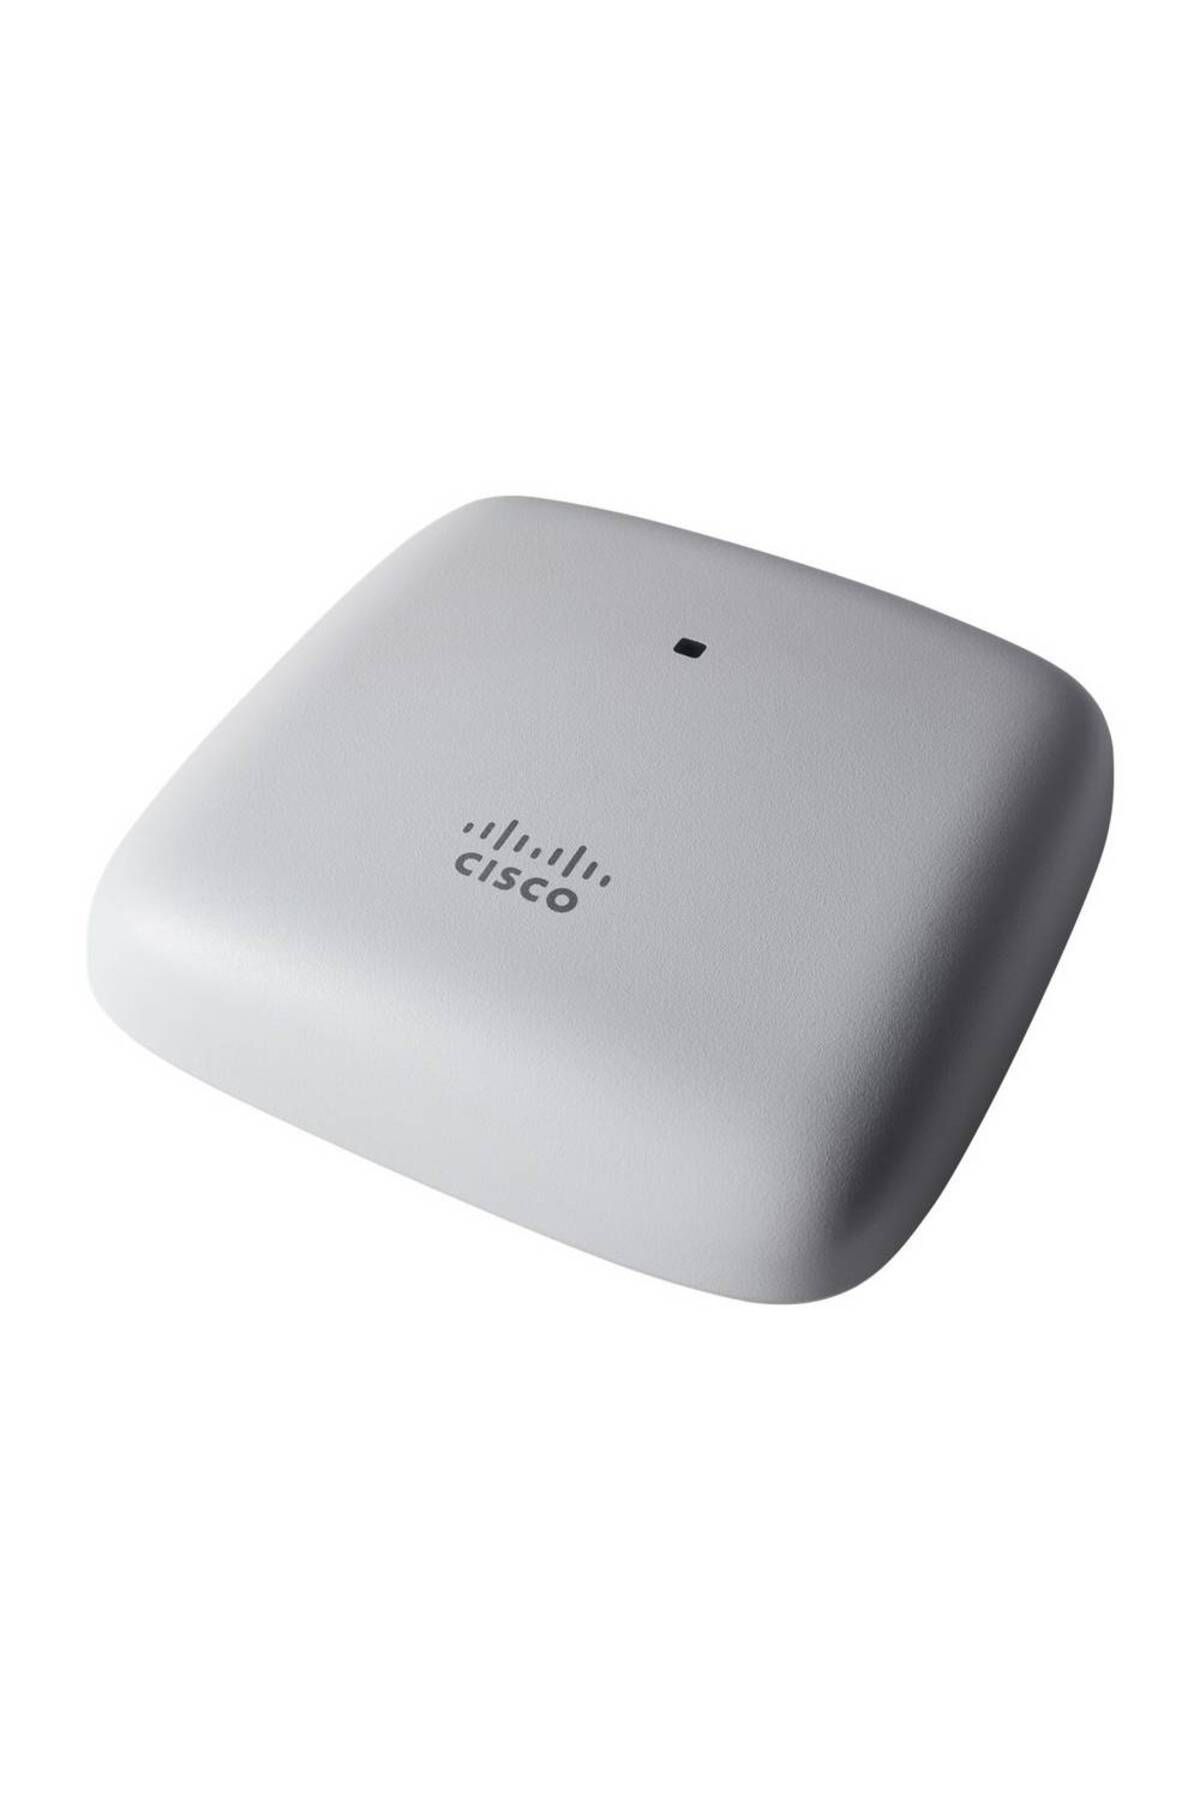 Cisco Cbw140ac-e 867 Mbps 2x2 Wave Access Point